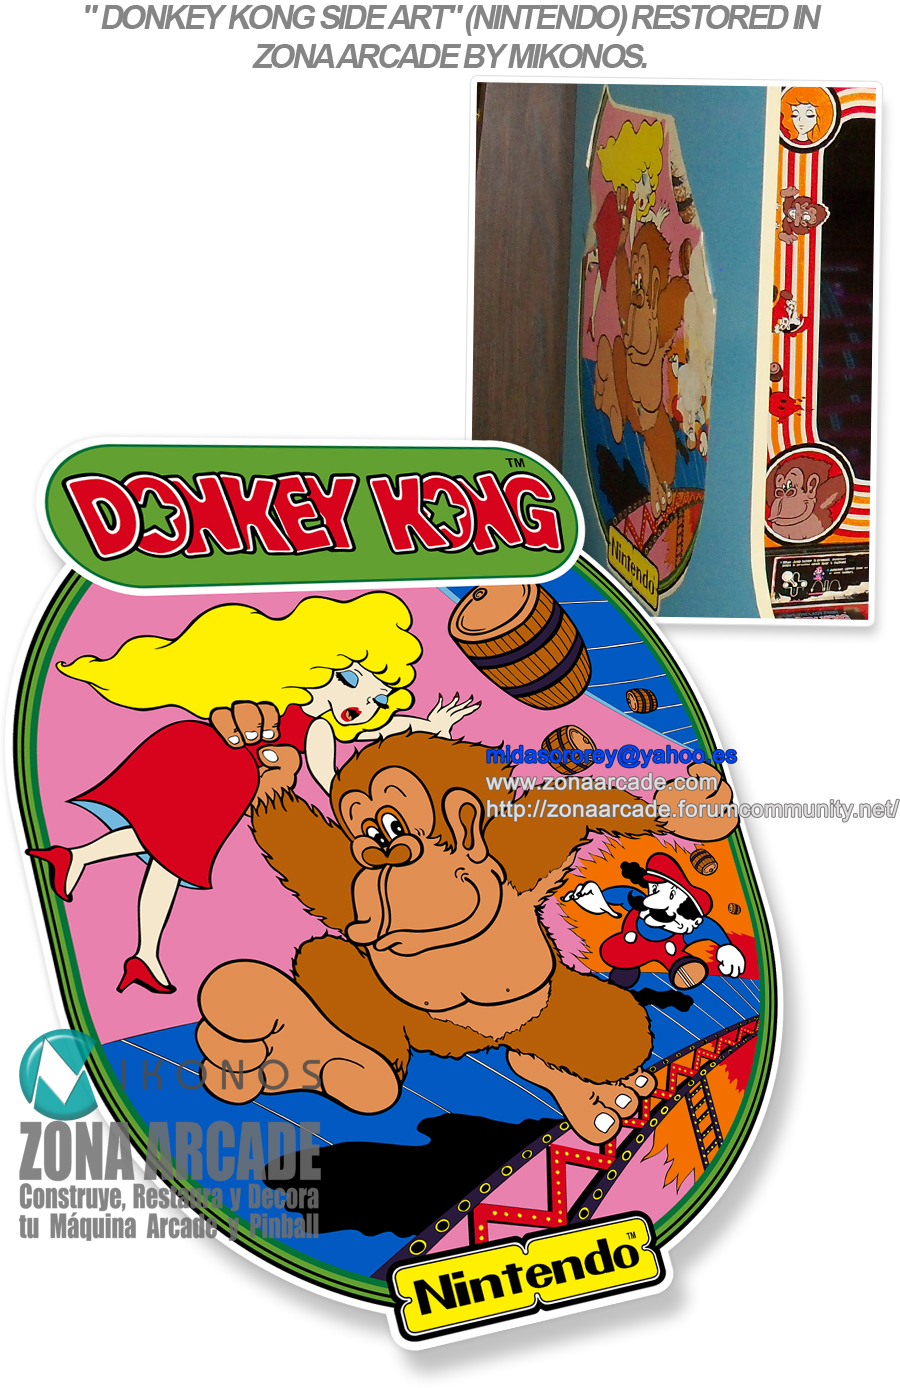 Donkey-Kong-Side-Art-Retouched-Mikonos1